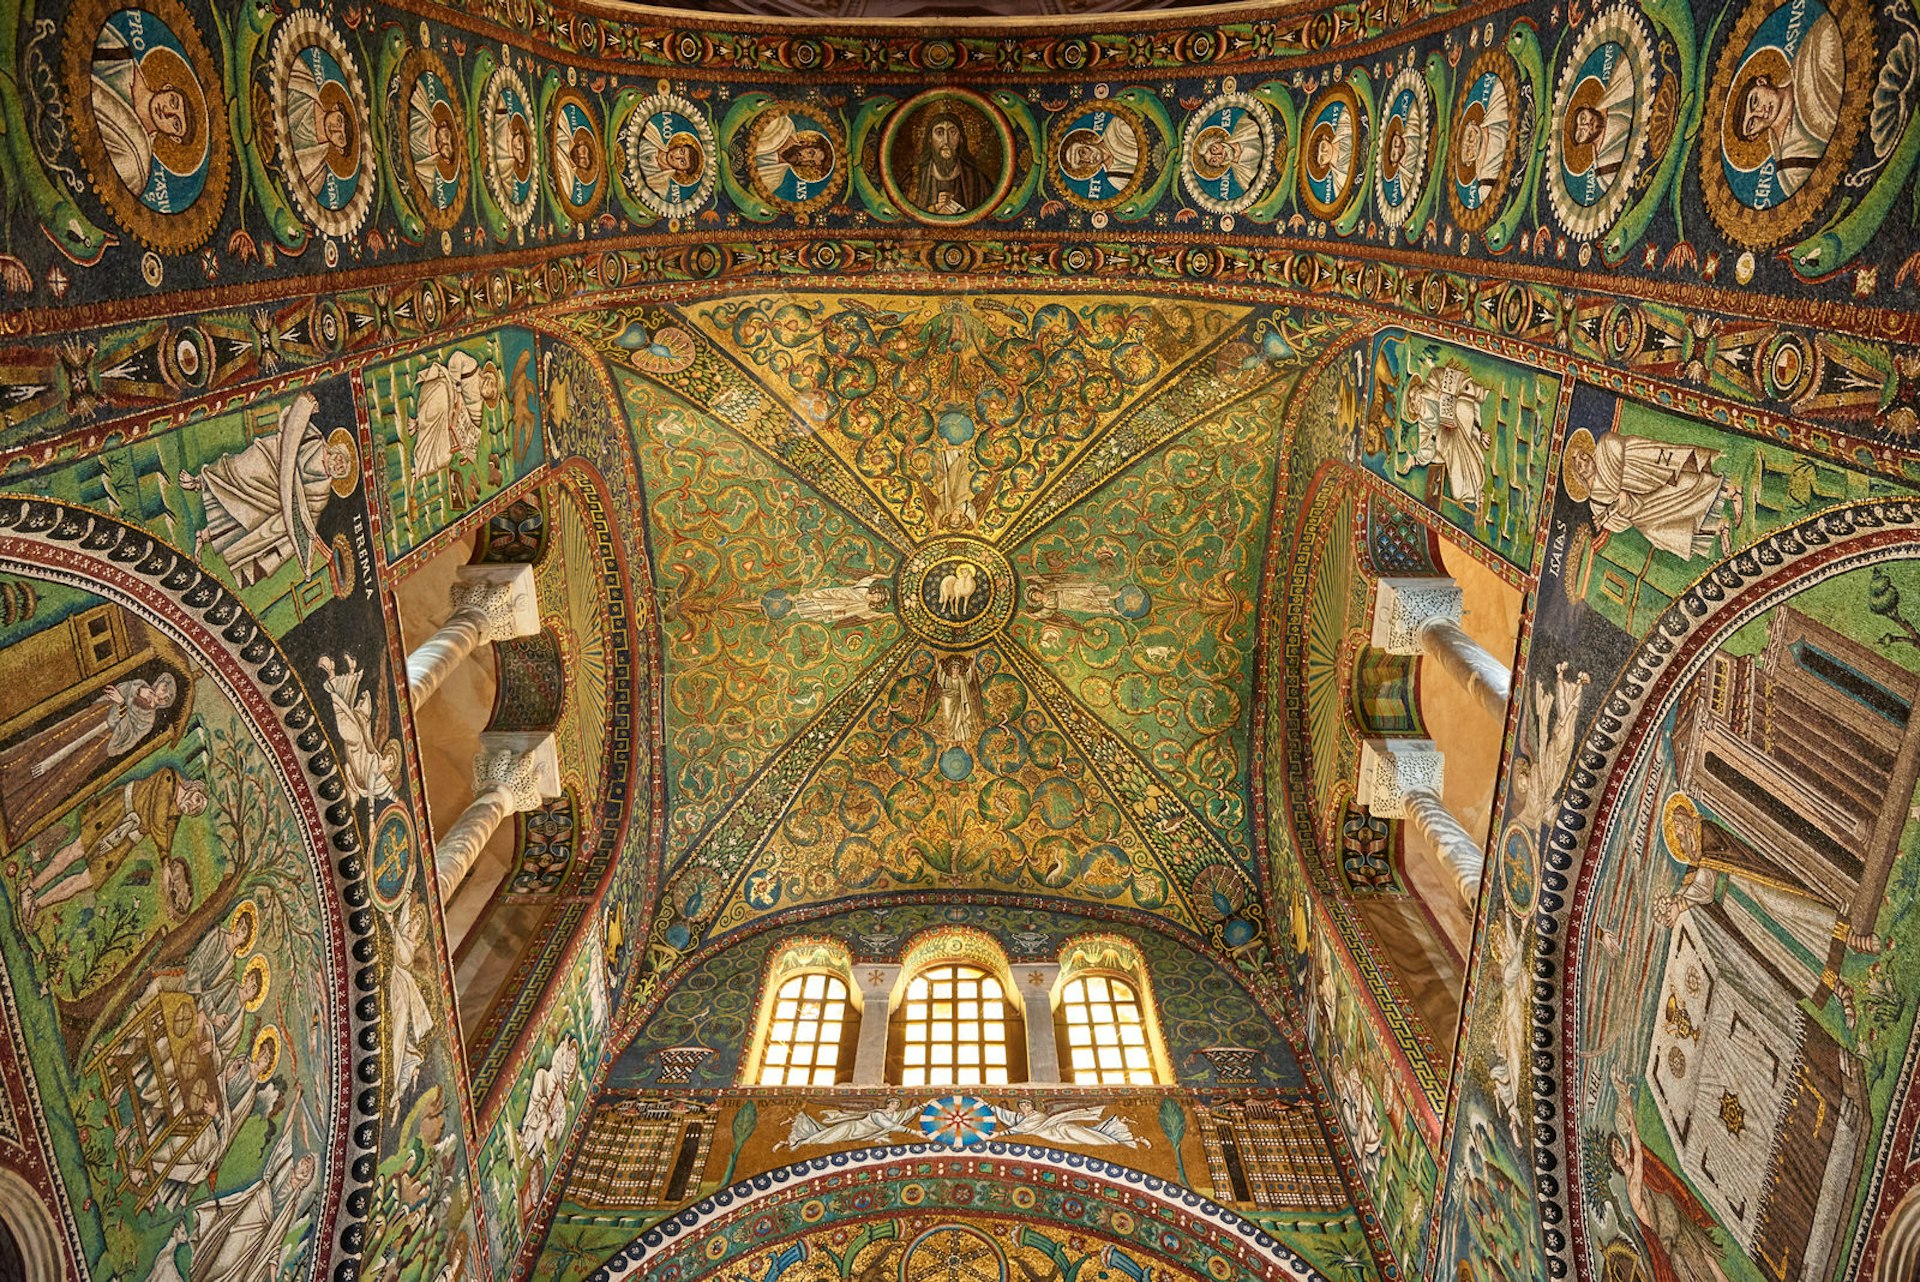 The spectacular mosaics in Basilica of San Vitale